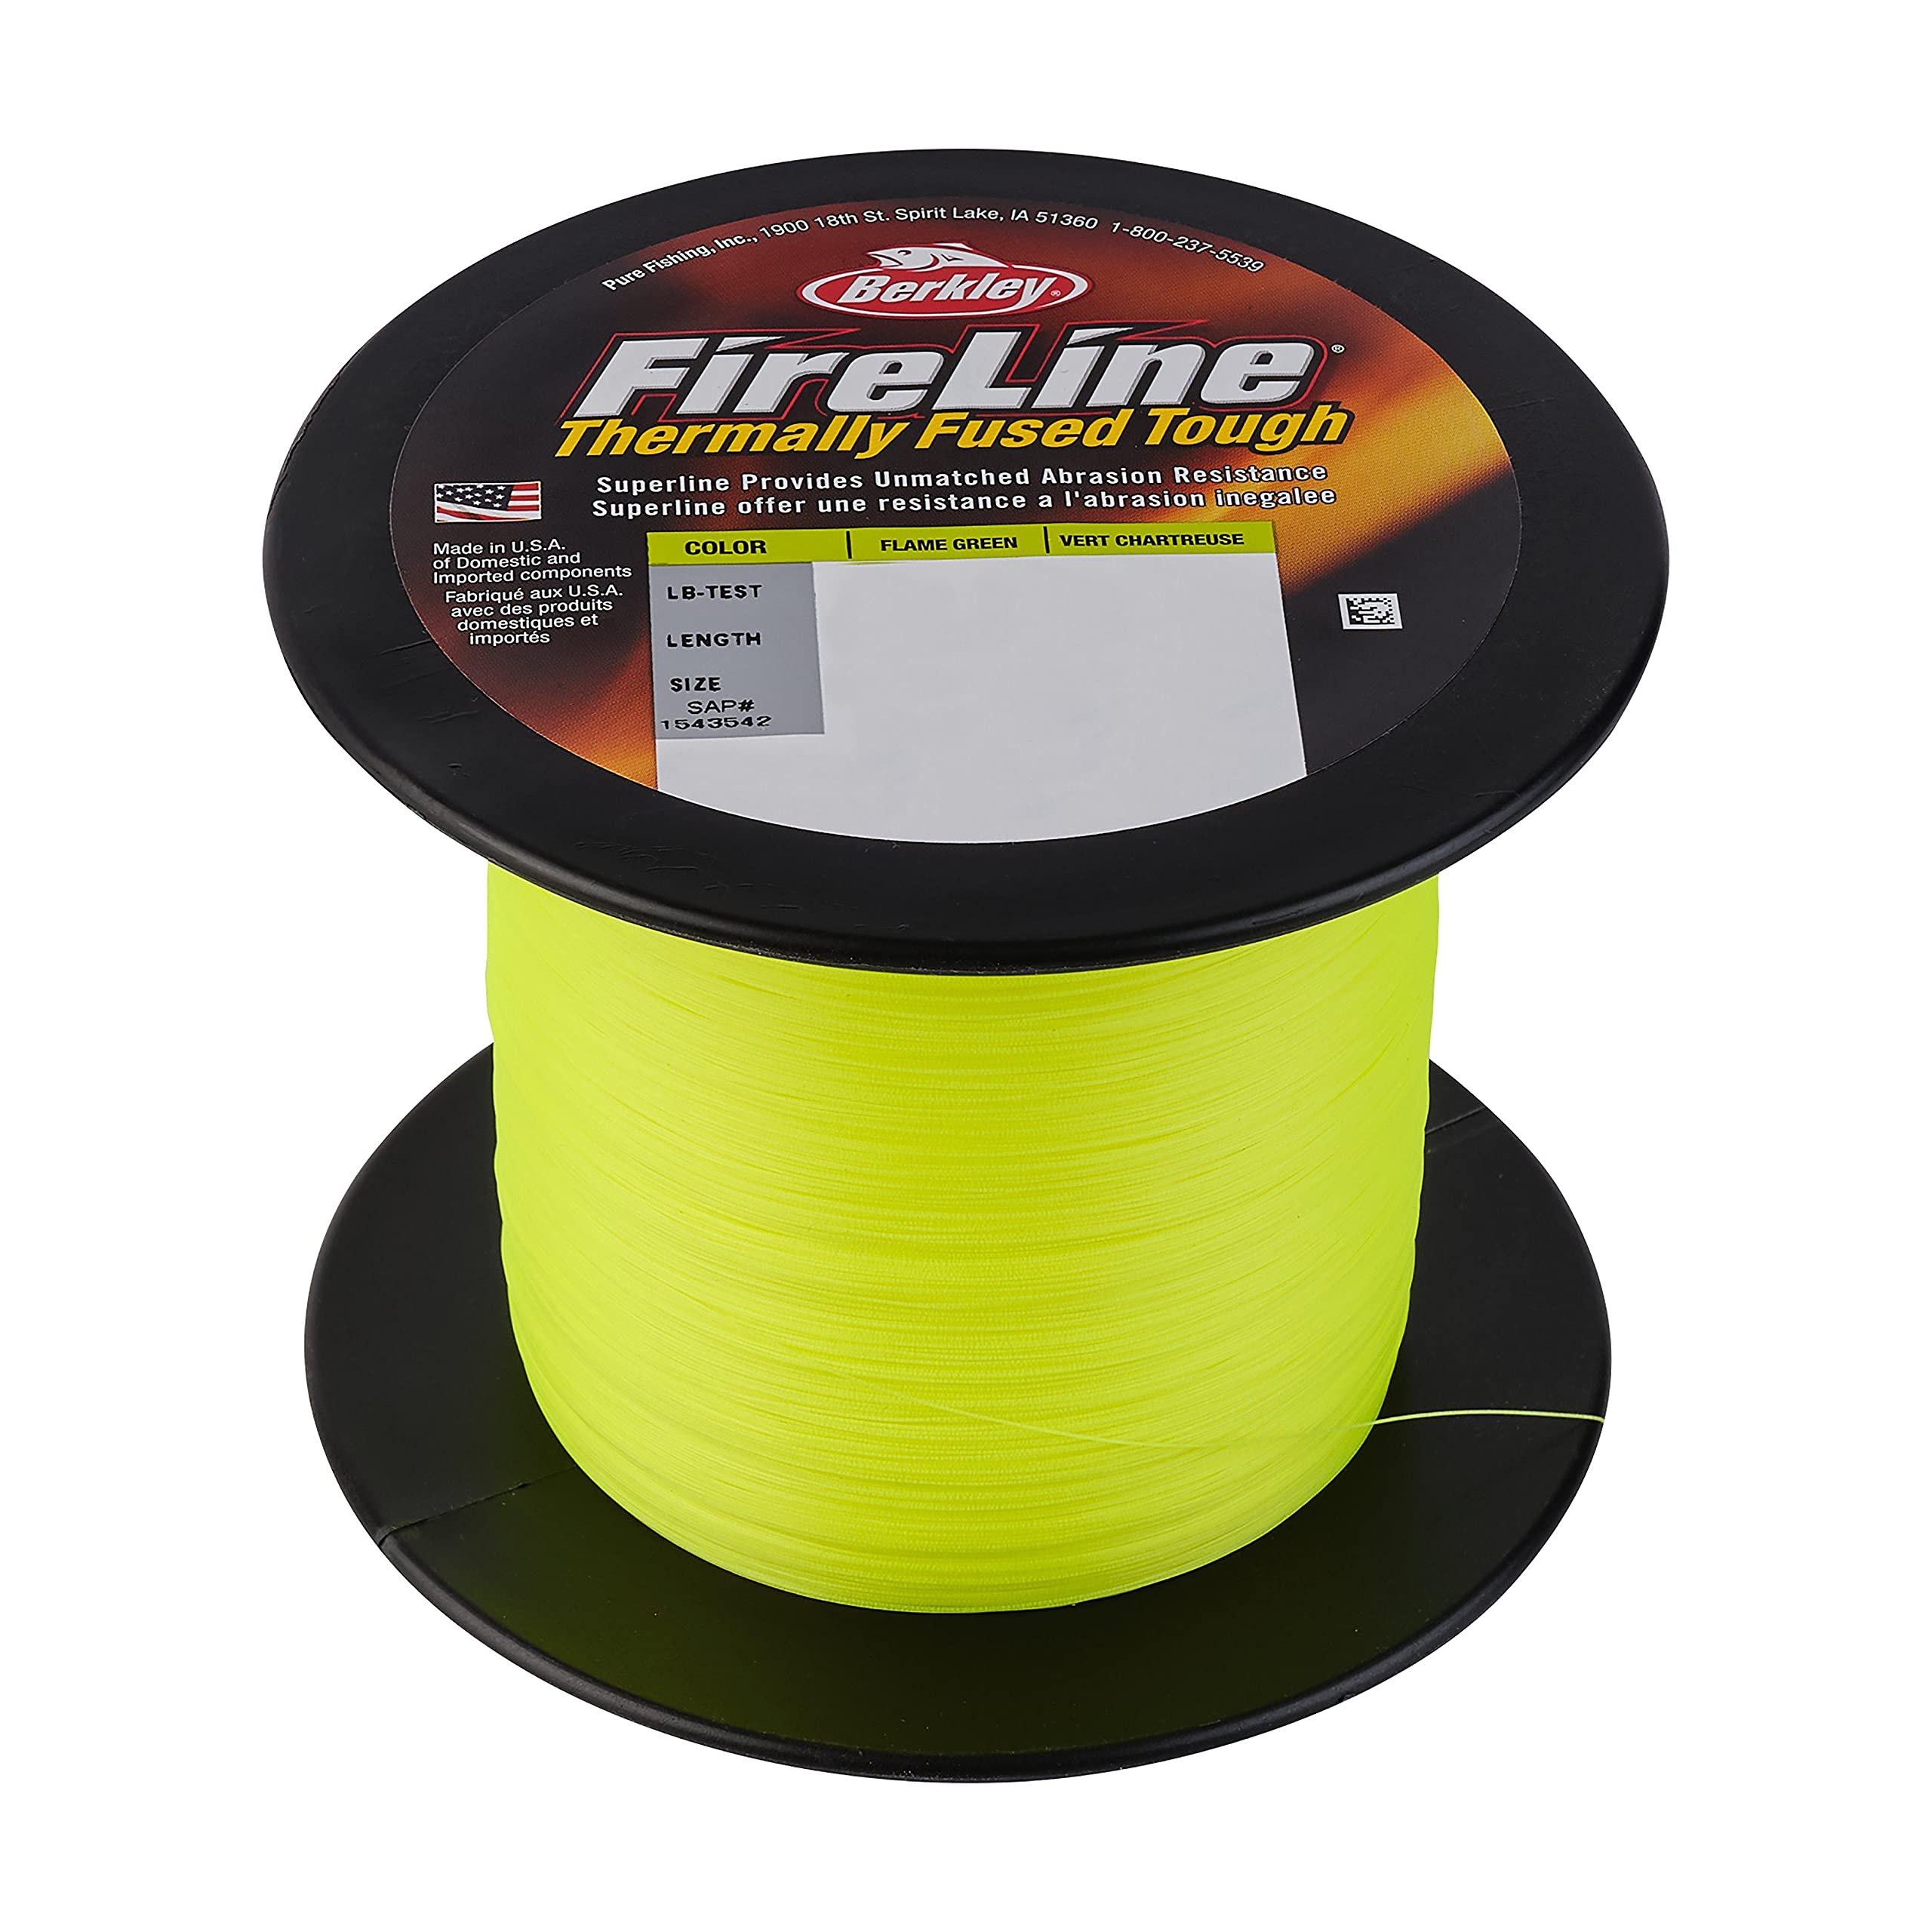 Berkley FireLine Superline Flame Green 4lb 1.8kg 1500yd 1371m Fishing Line Suitable for Freshwater Environments